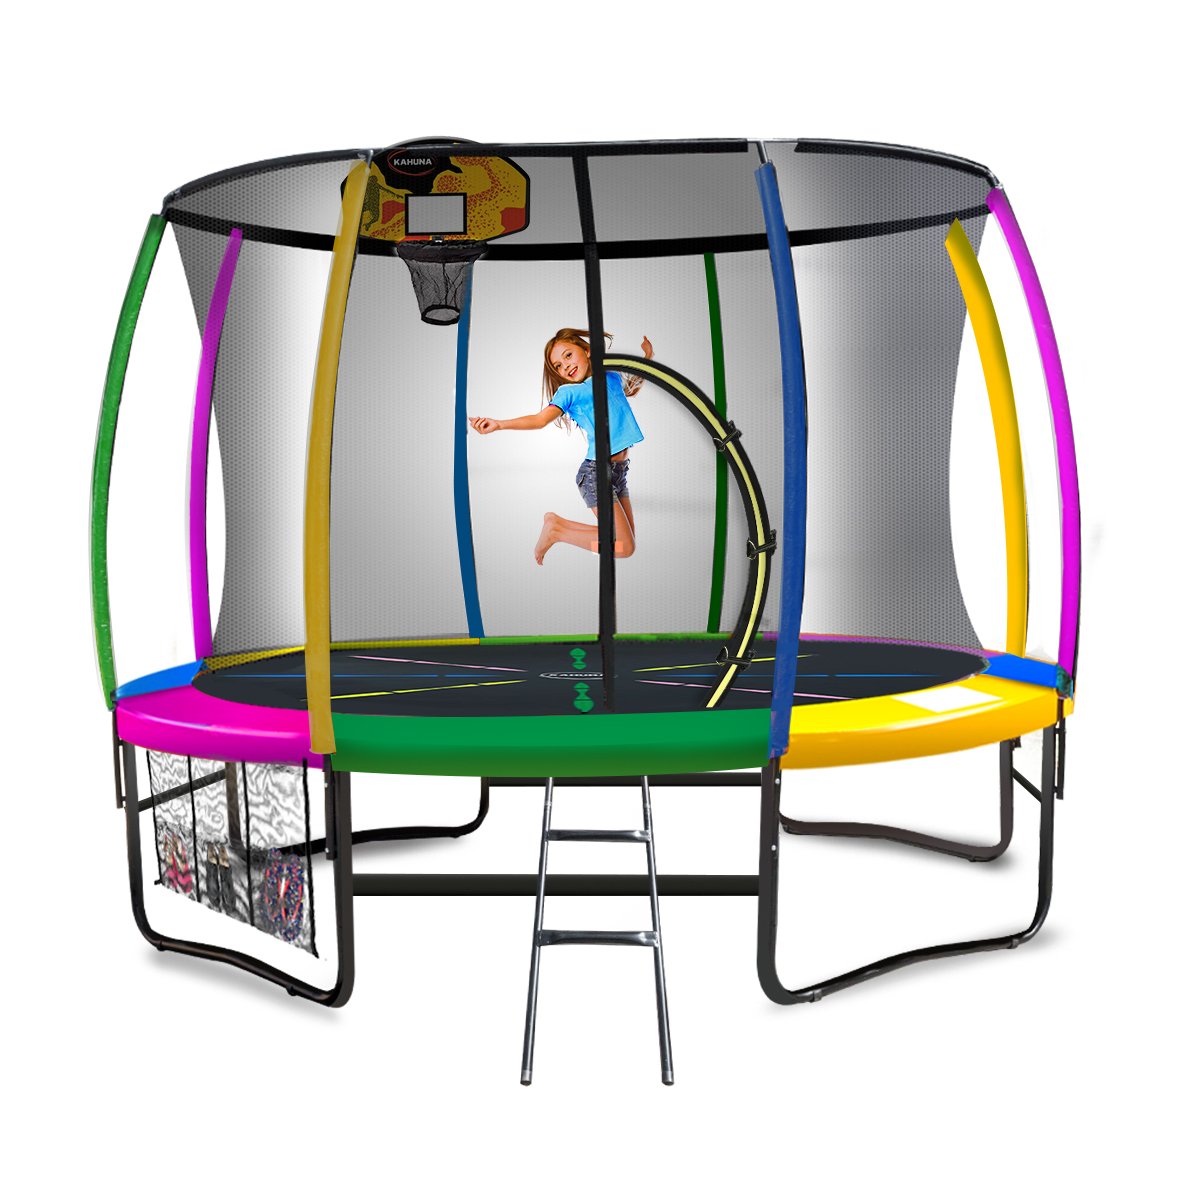 Kahuna Trampoline 10 ft with Basketball set - Rainbow